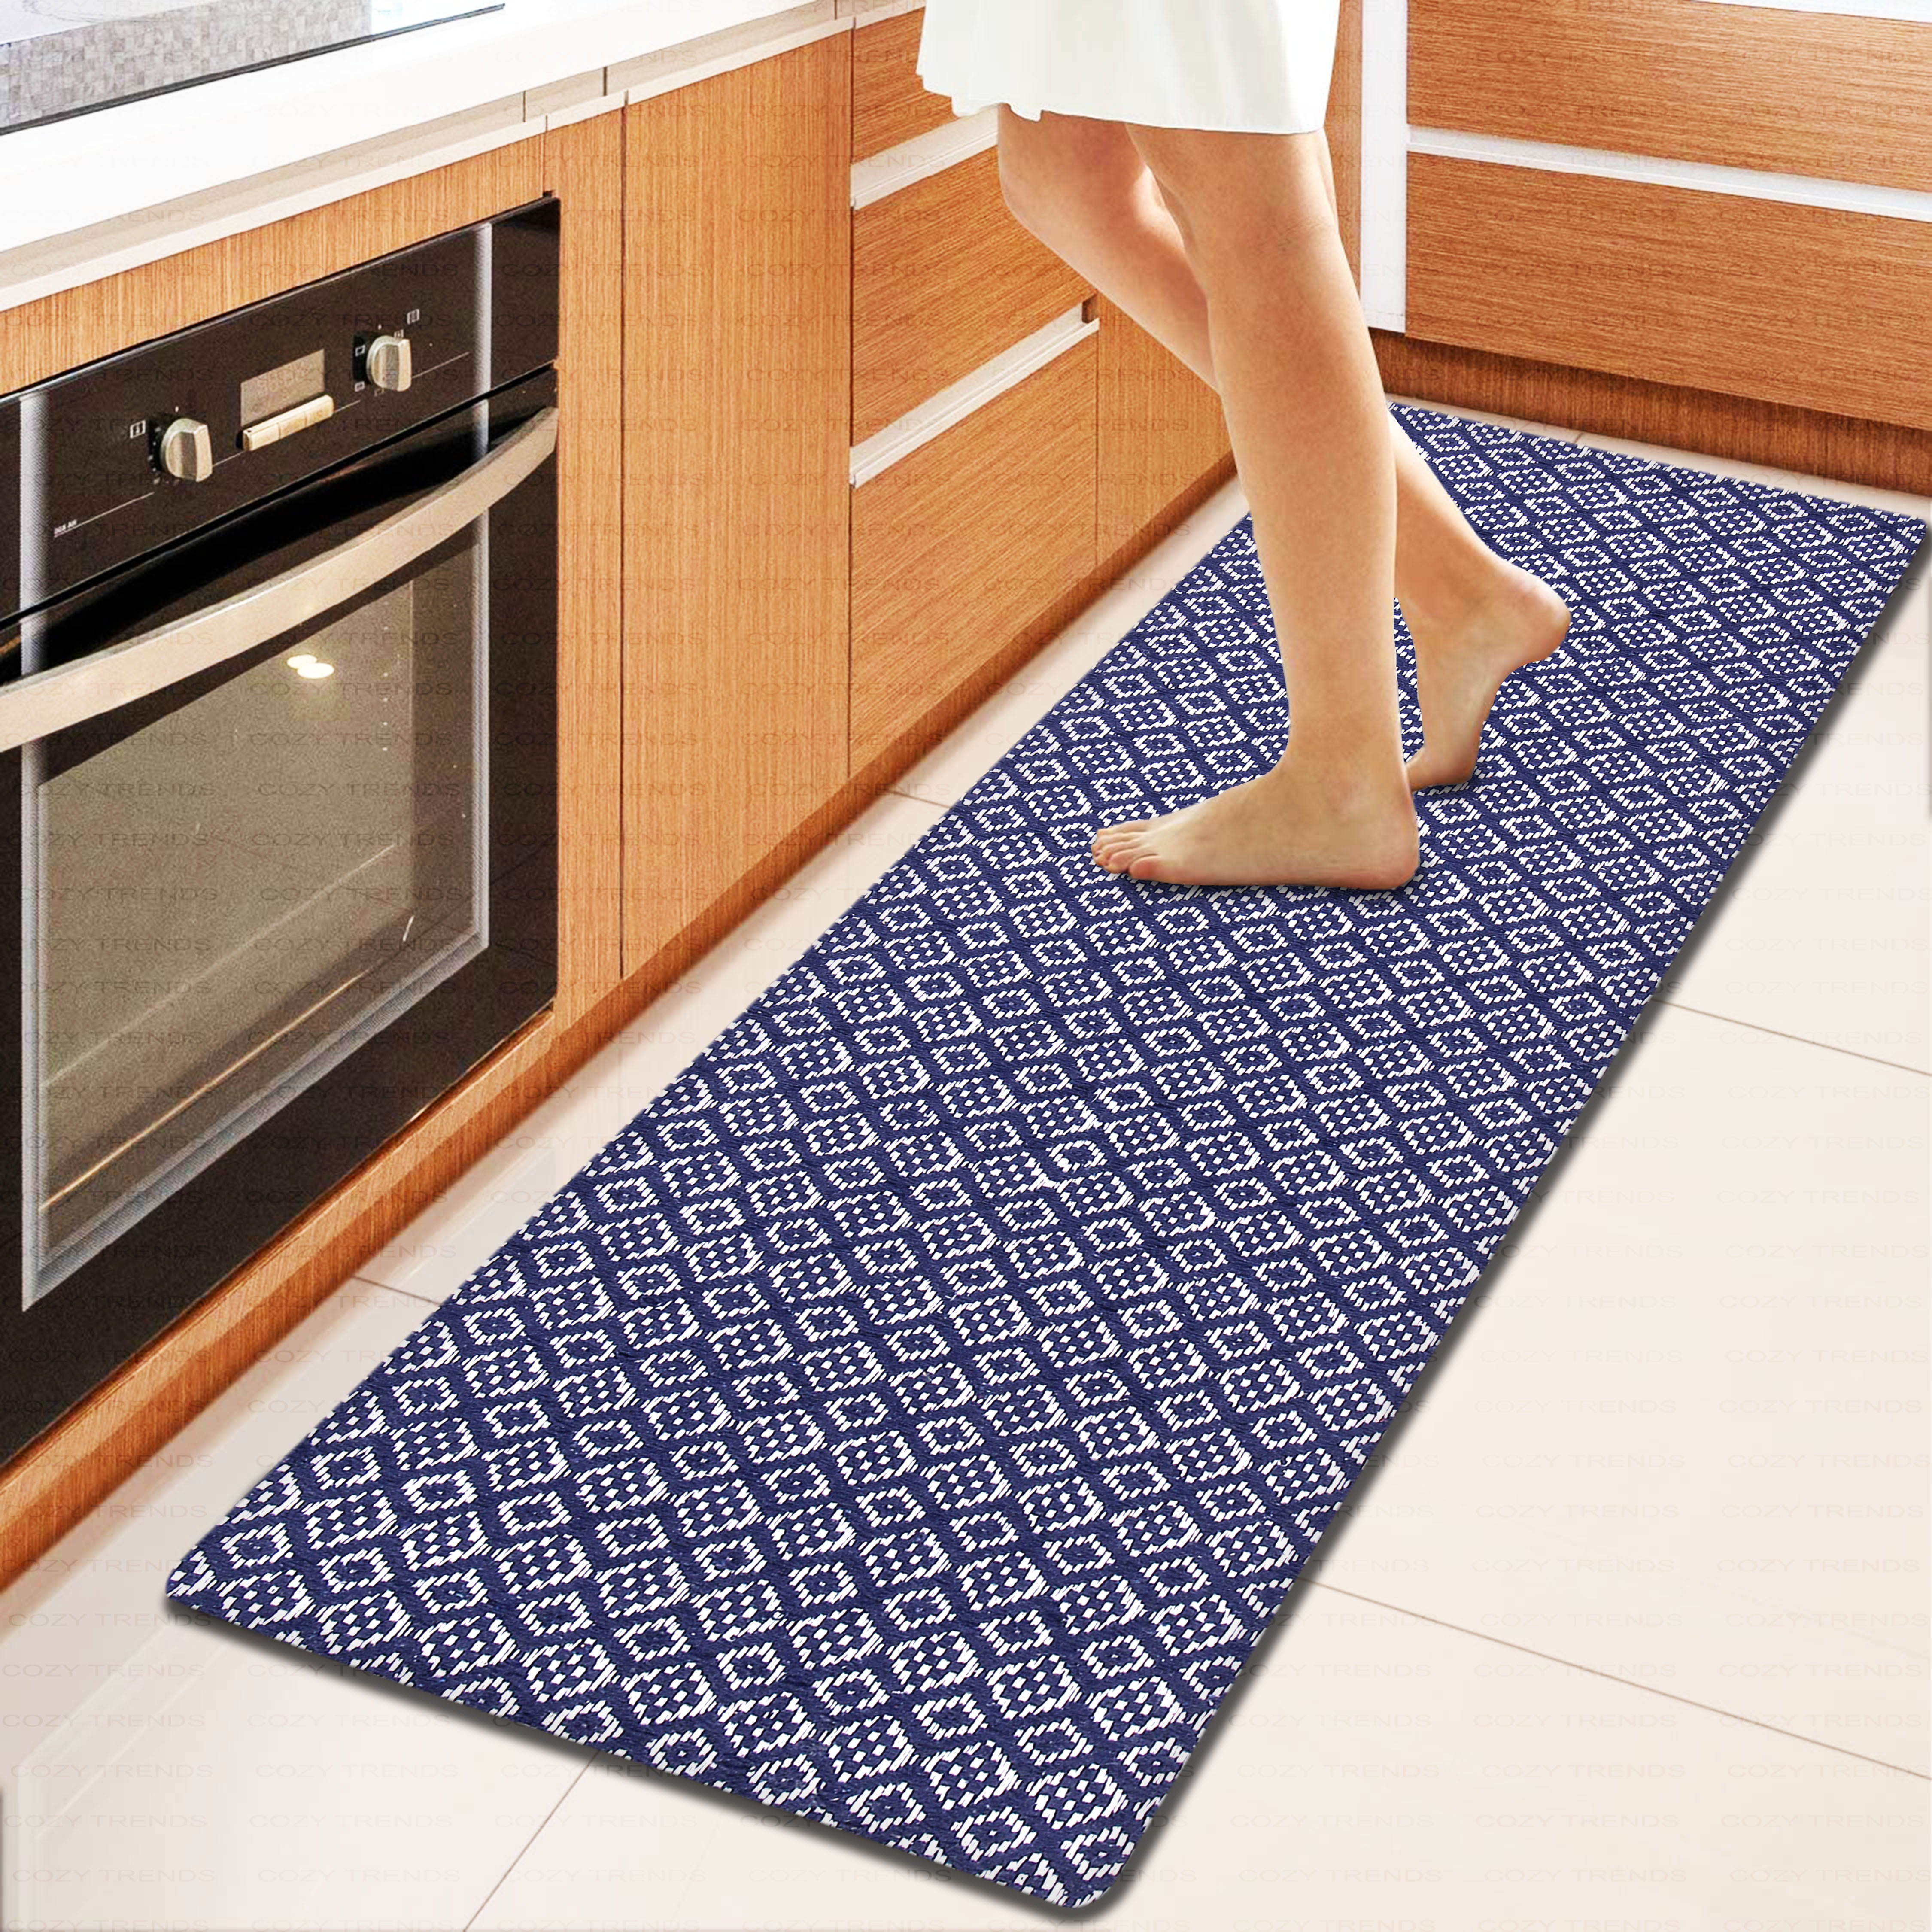 Galmaxs7 Kitchen Floor Mat Blue Kitchen Rugs Anti Fatigue Kitchen